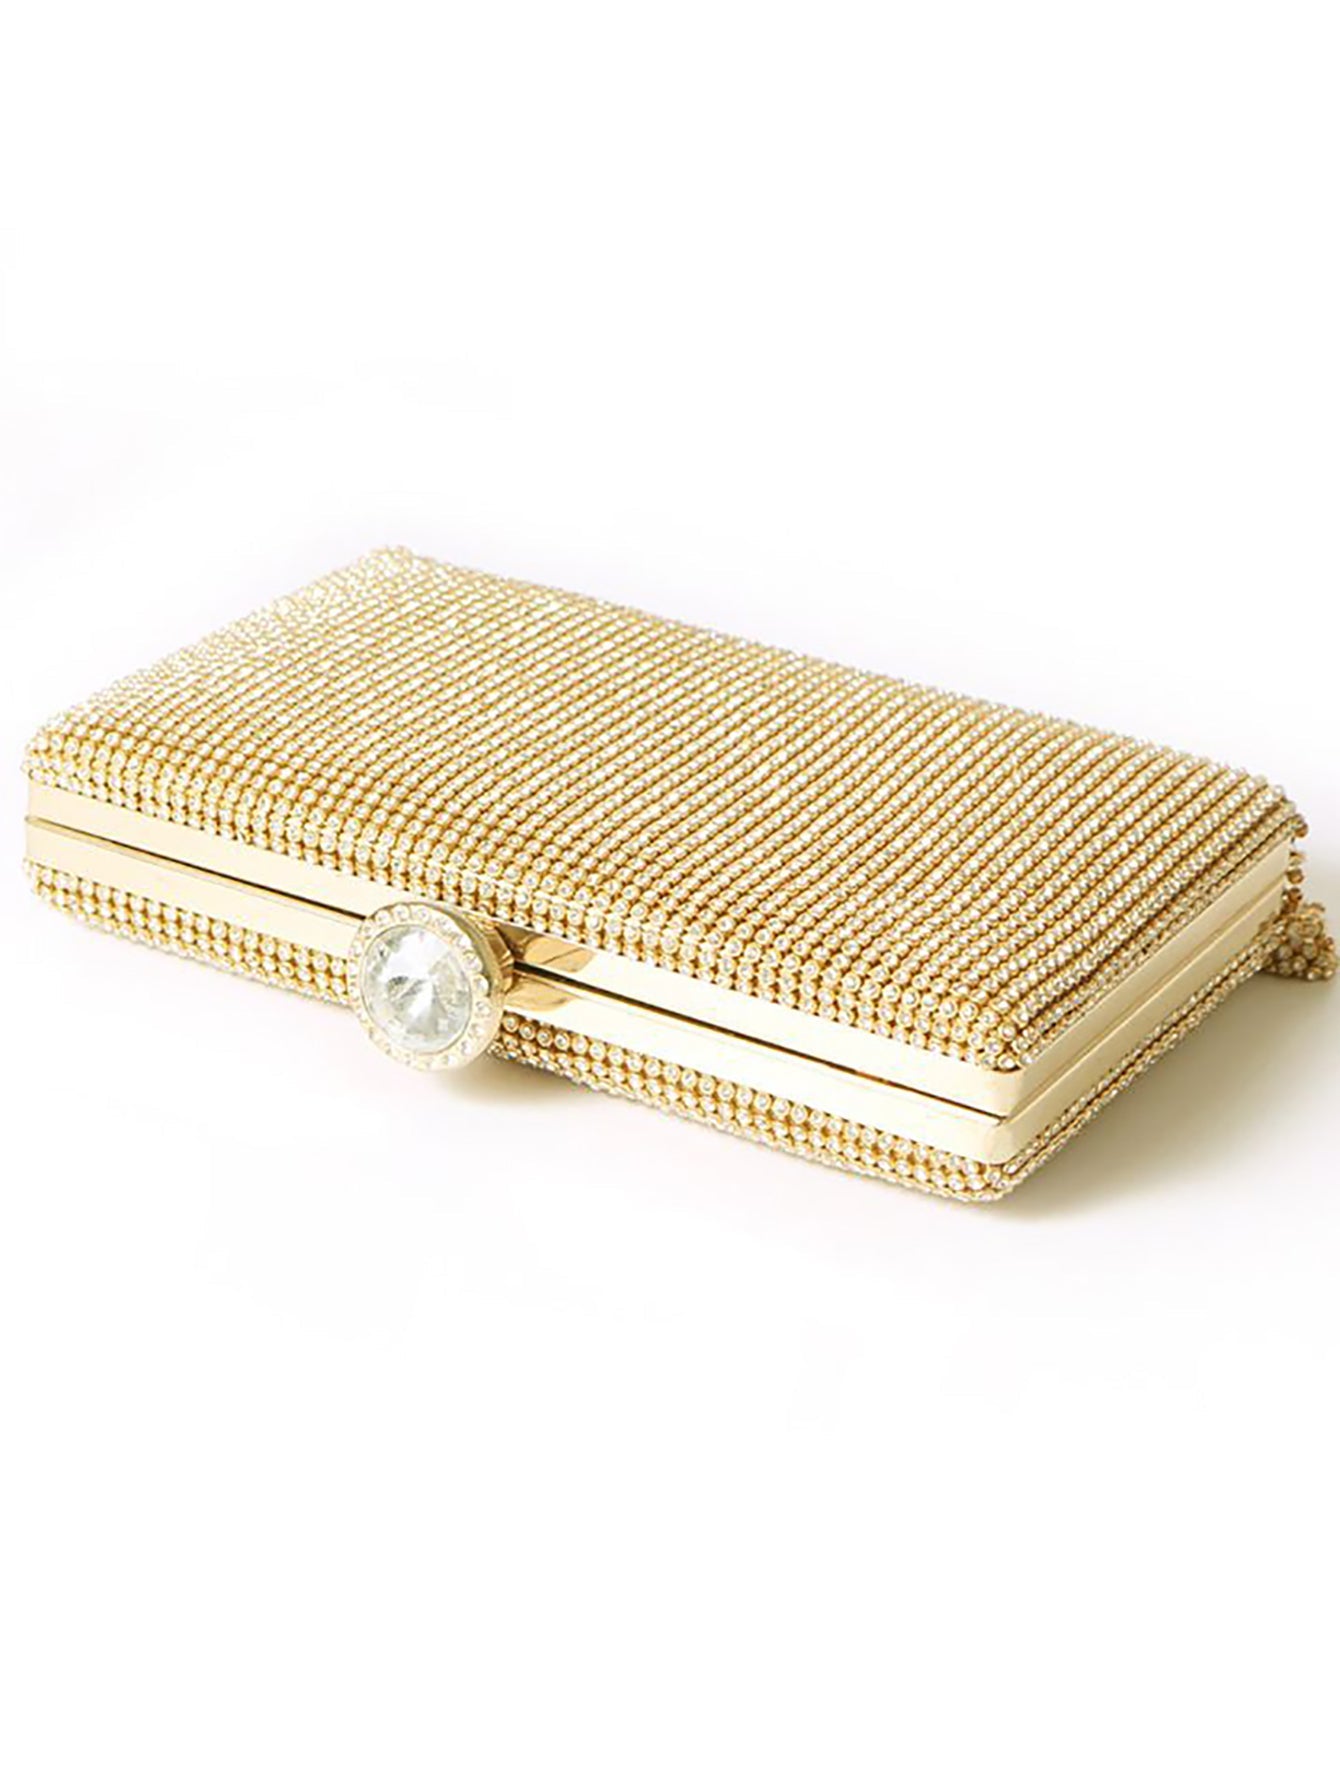 Tassels Golden Exquisite Square Party Handbag